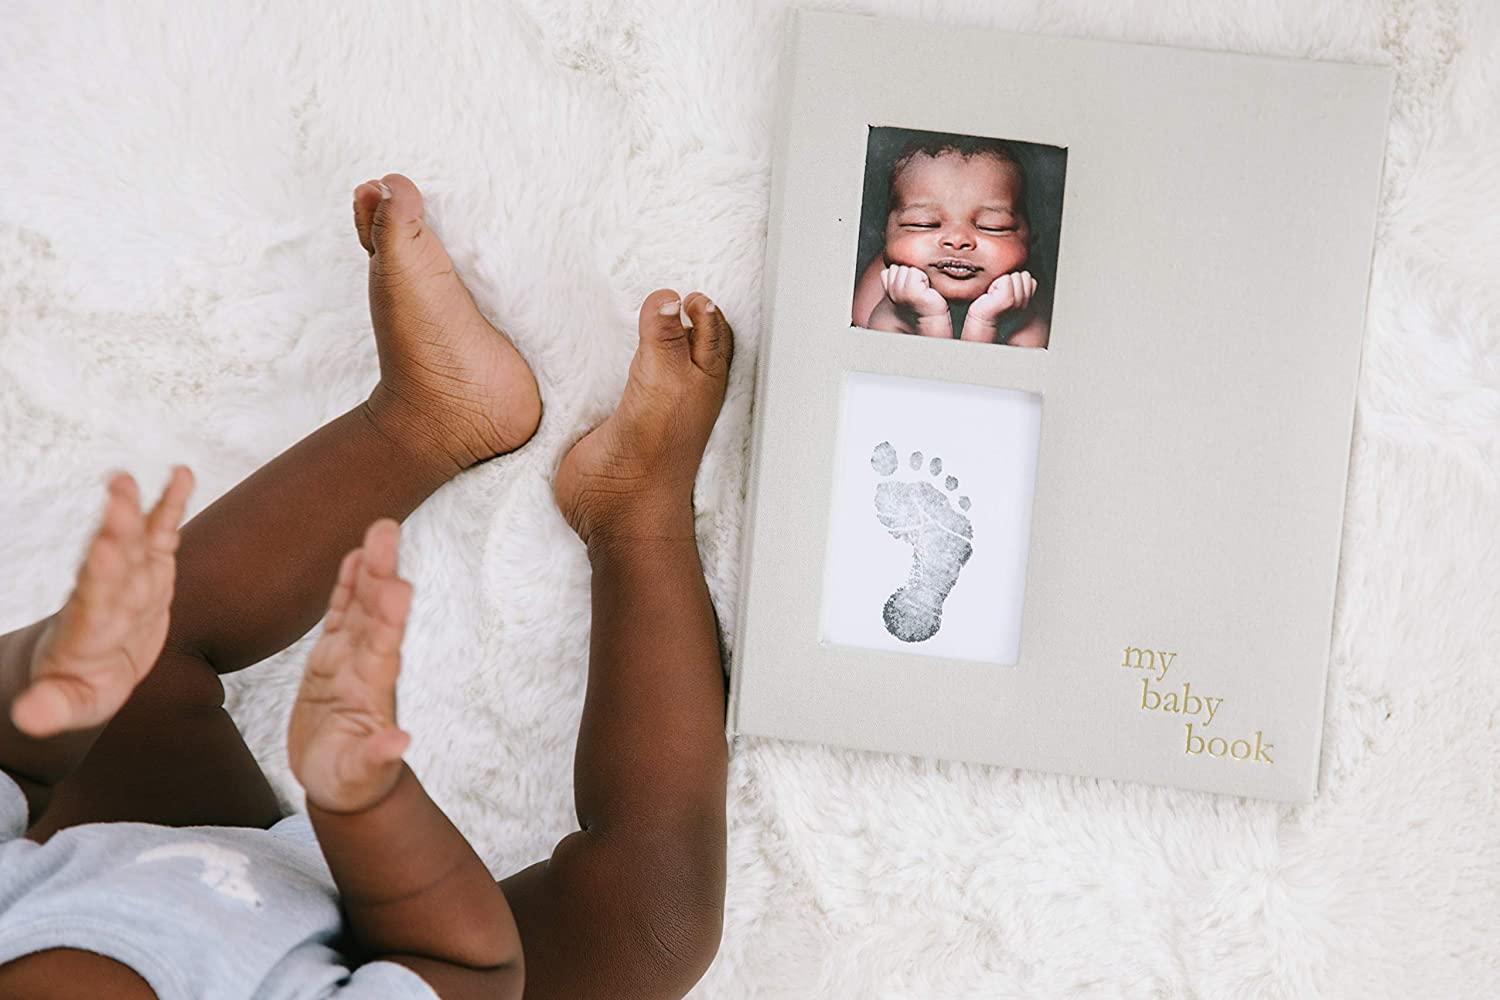 Pearhead Black Newborn Baby Handprint or Footprint Clean Touch Ink Pad